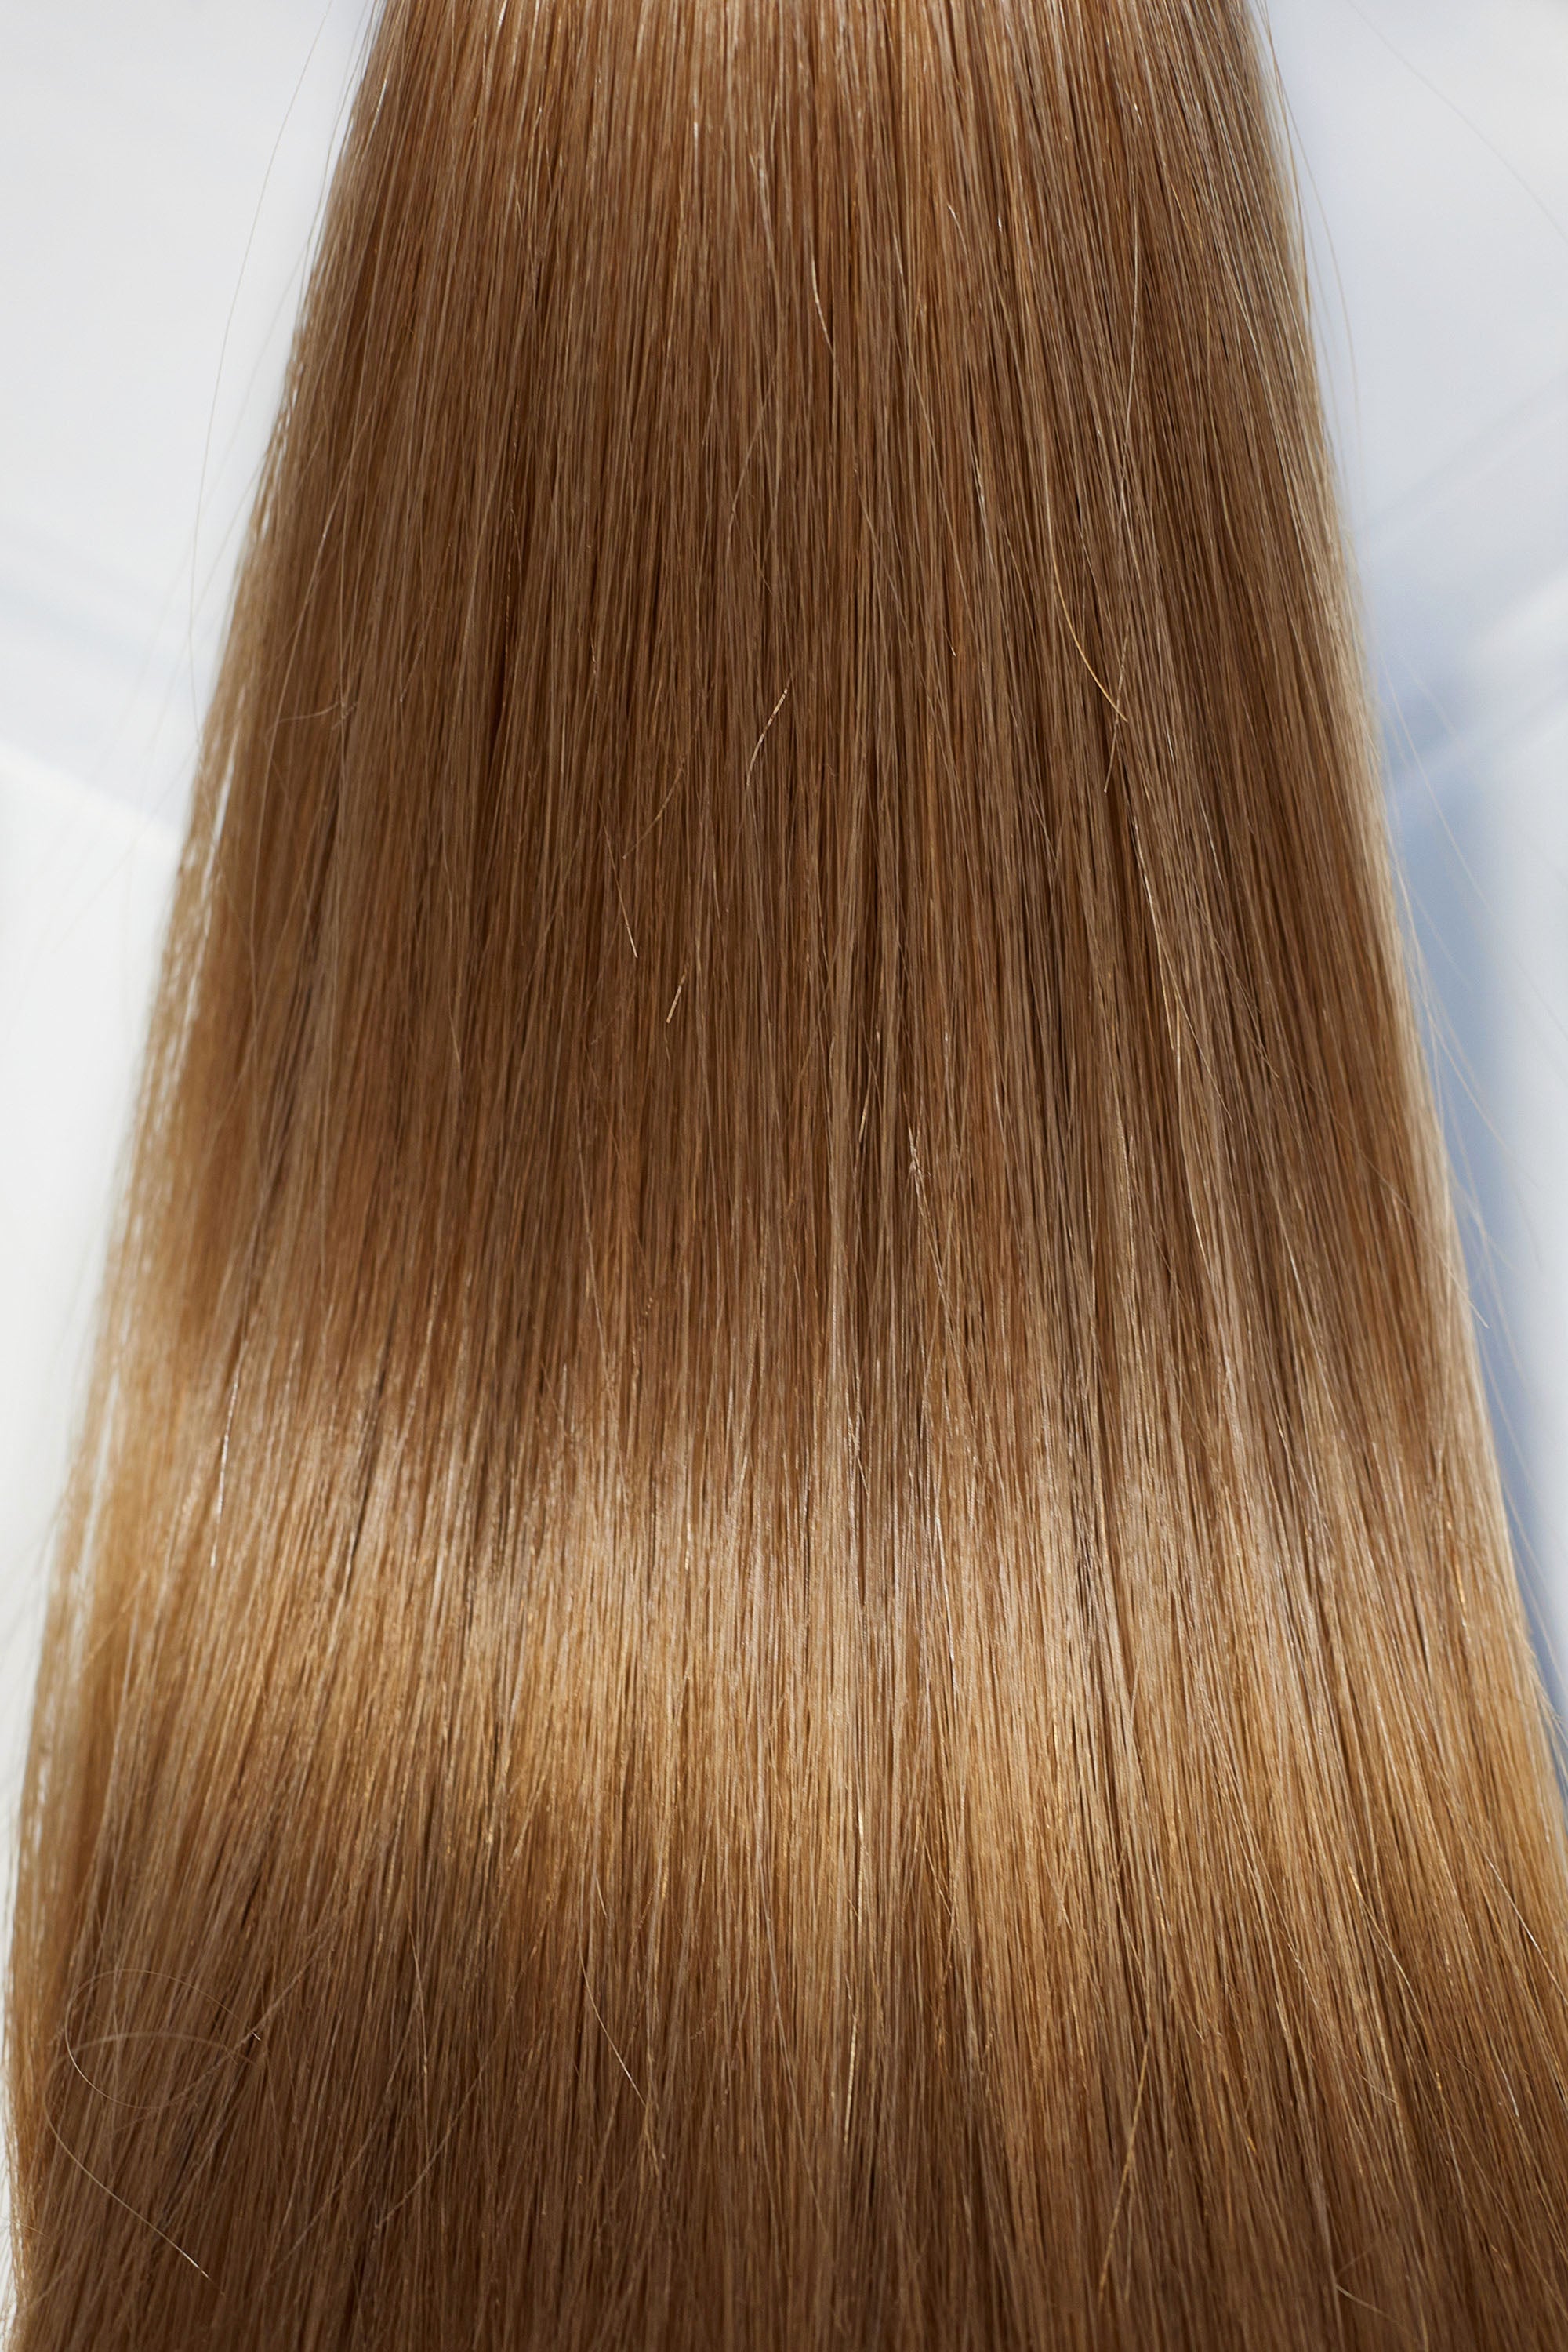 Behair professional Keratin Tip "Premium" 22" (55cm) Natural Straight Caramel Brown #8 - 25g (Micro - 0.5g each pcs) hair extensions